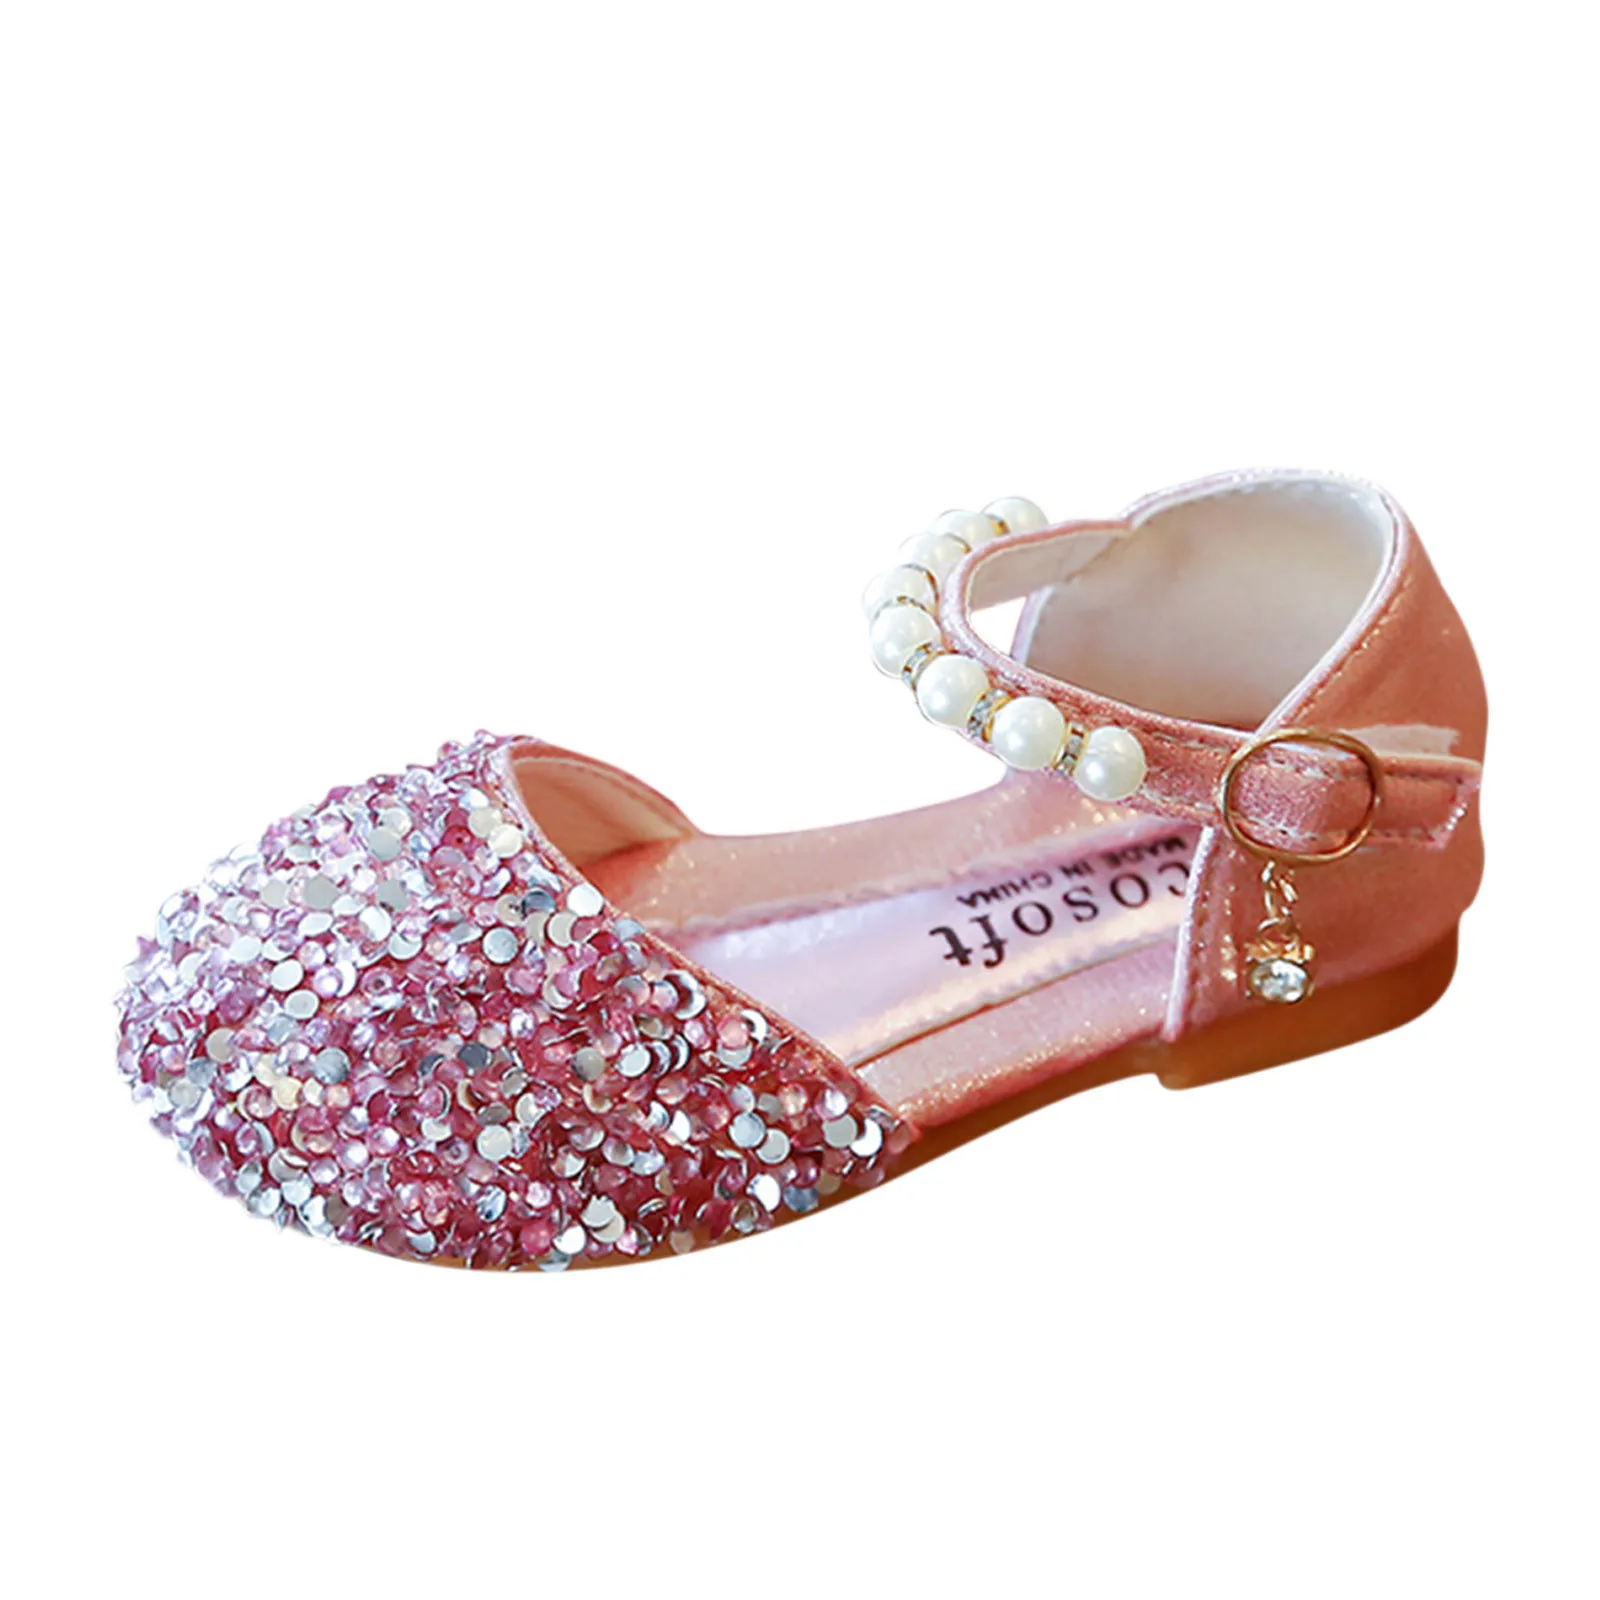 Adeliber Girls Sandals Infant Pearl Crystal Sandals Children Baby Princess Shoes Summer Bowknot Sandals 